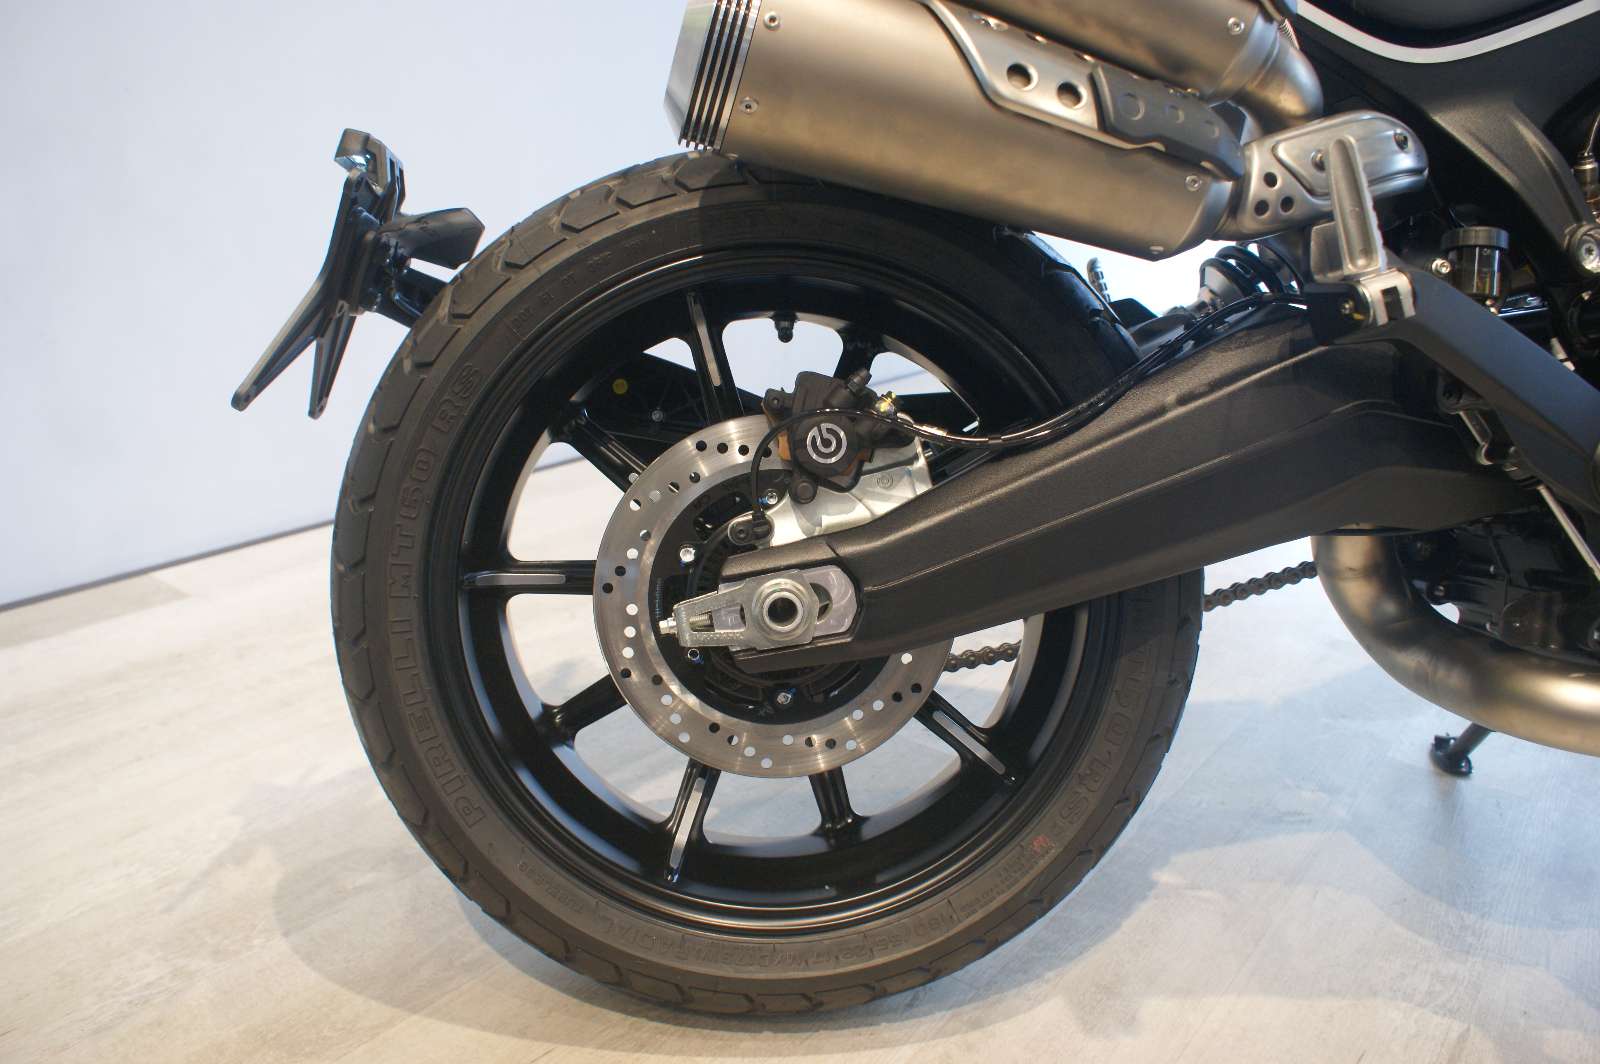 Ducati, Ducati Scrambler 1100 Pro, Ducati Sport Pro